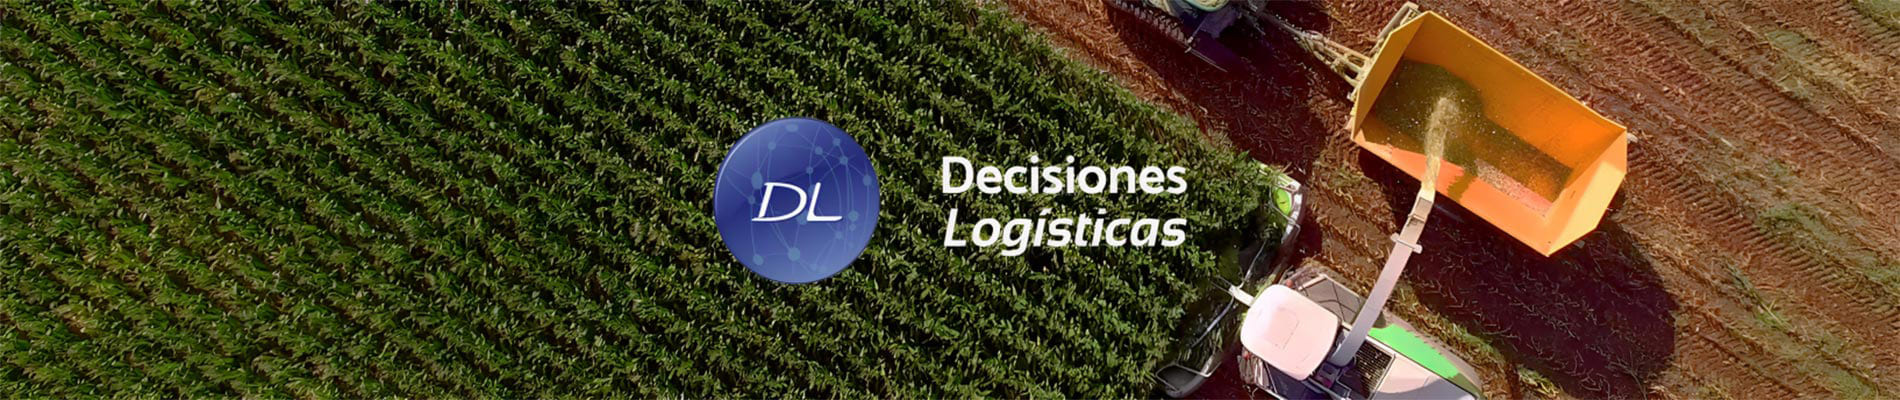 Decisiones Logísticas’ logo over the field